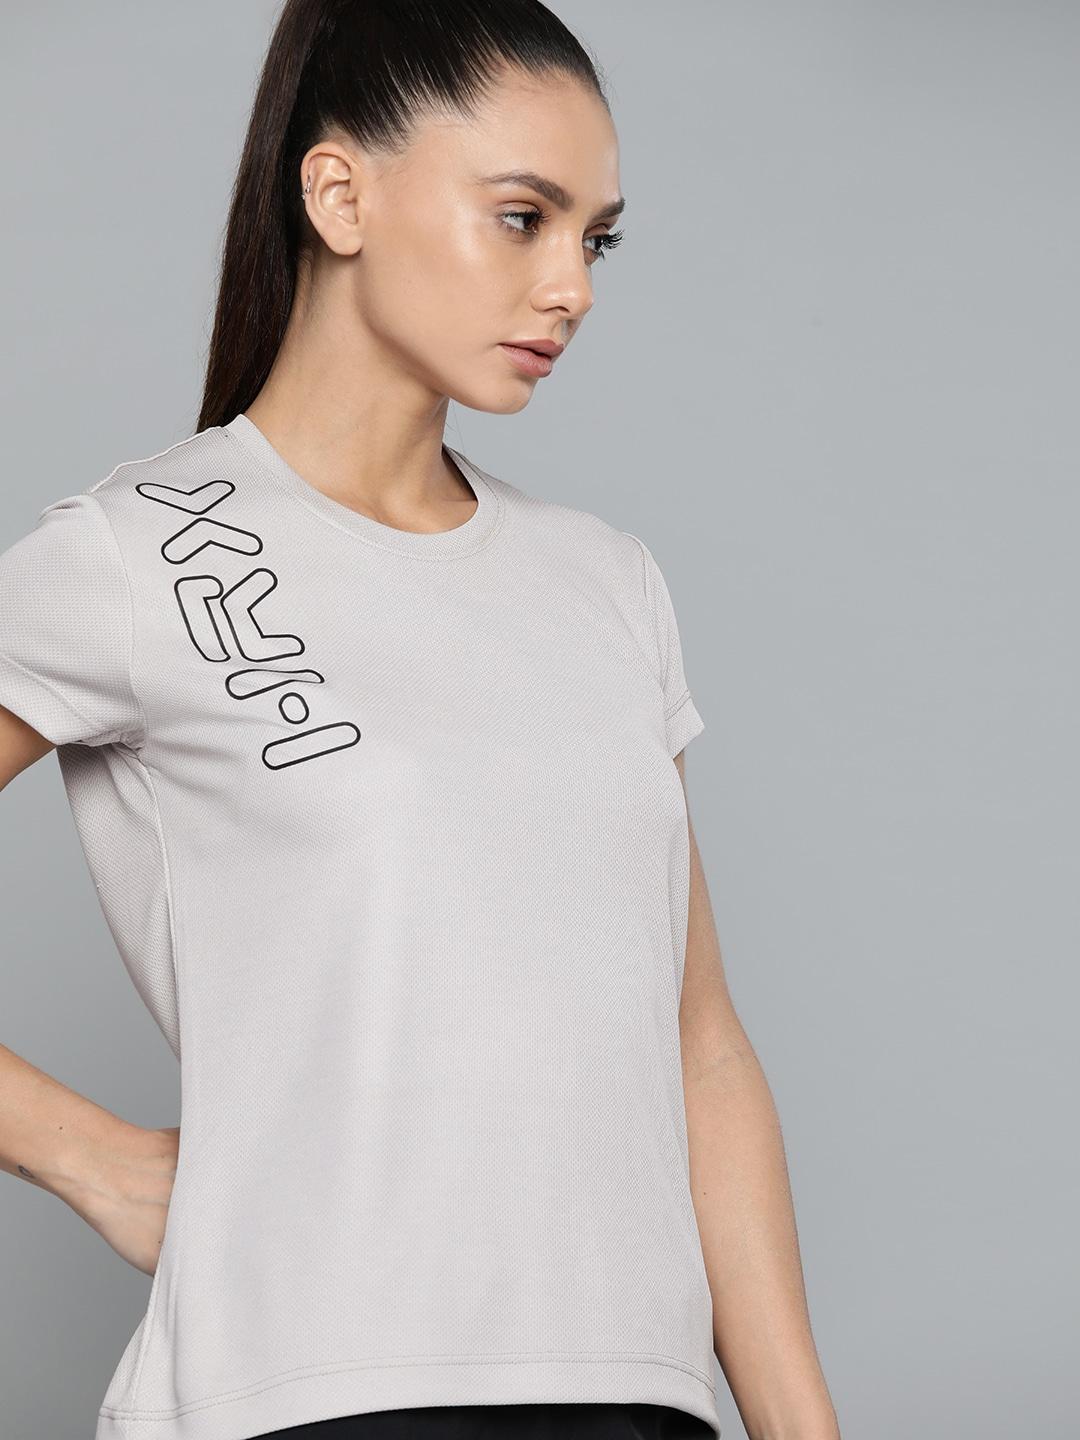 hrx-by-hrithik-roshan-running-women-wet-weather-rapid-dry-brand-carrier-t-shirt